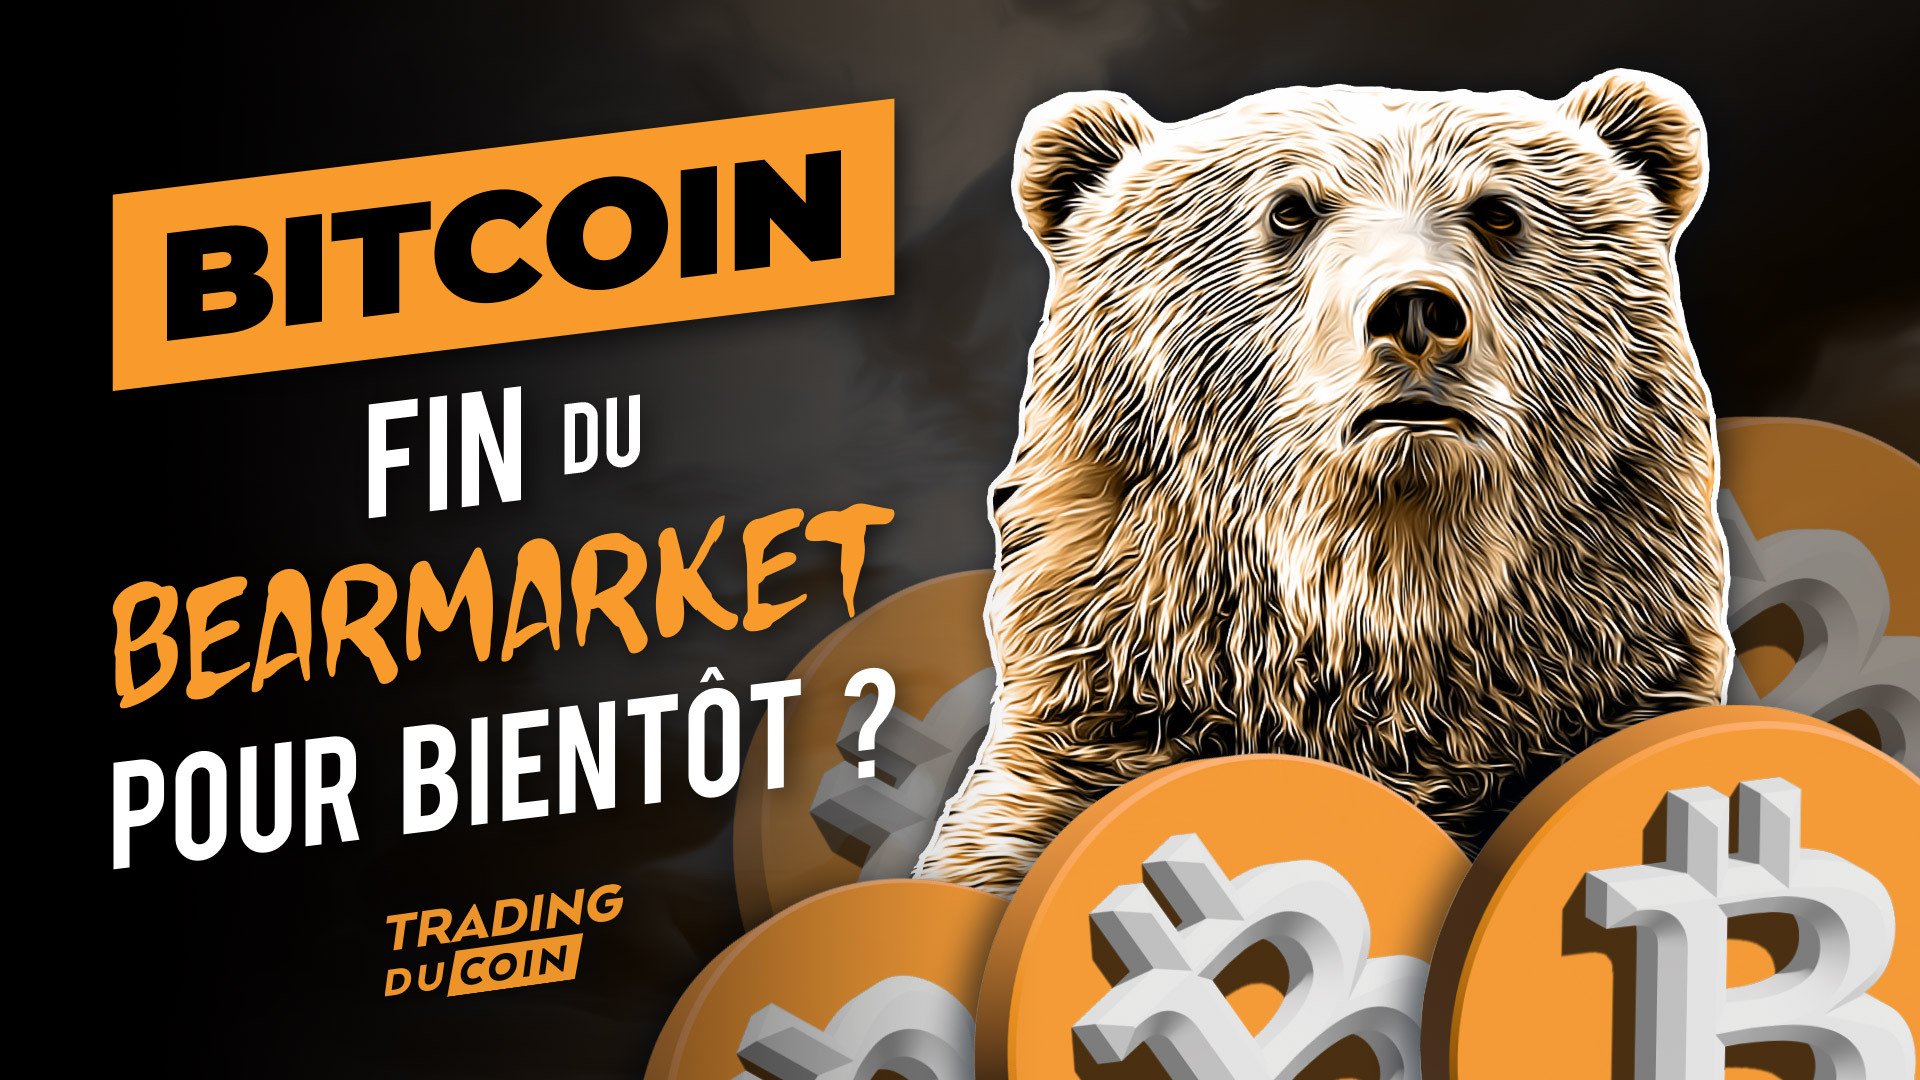 Bitcoin Analysis – End of the bear market soon?